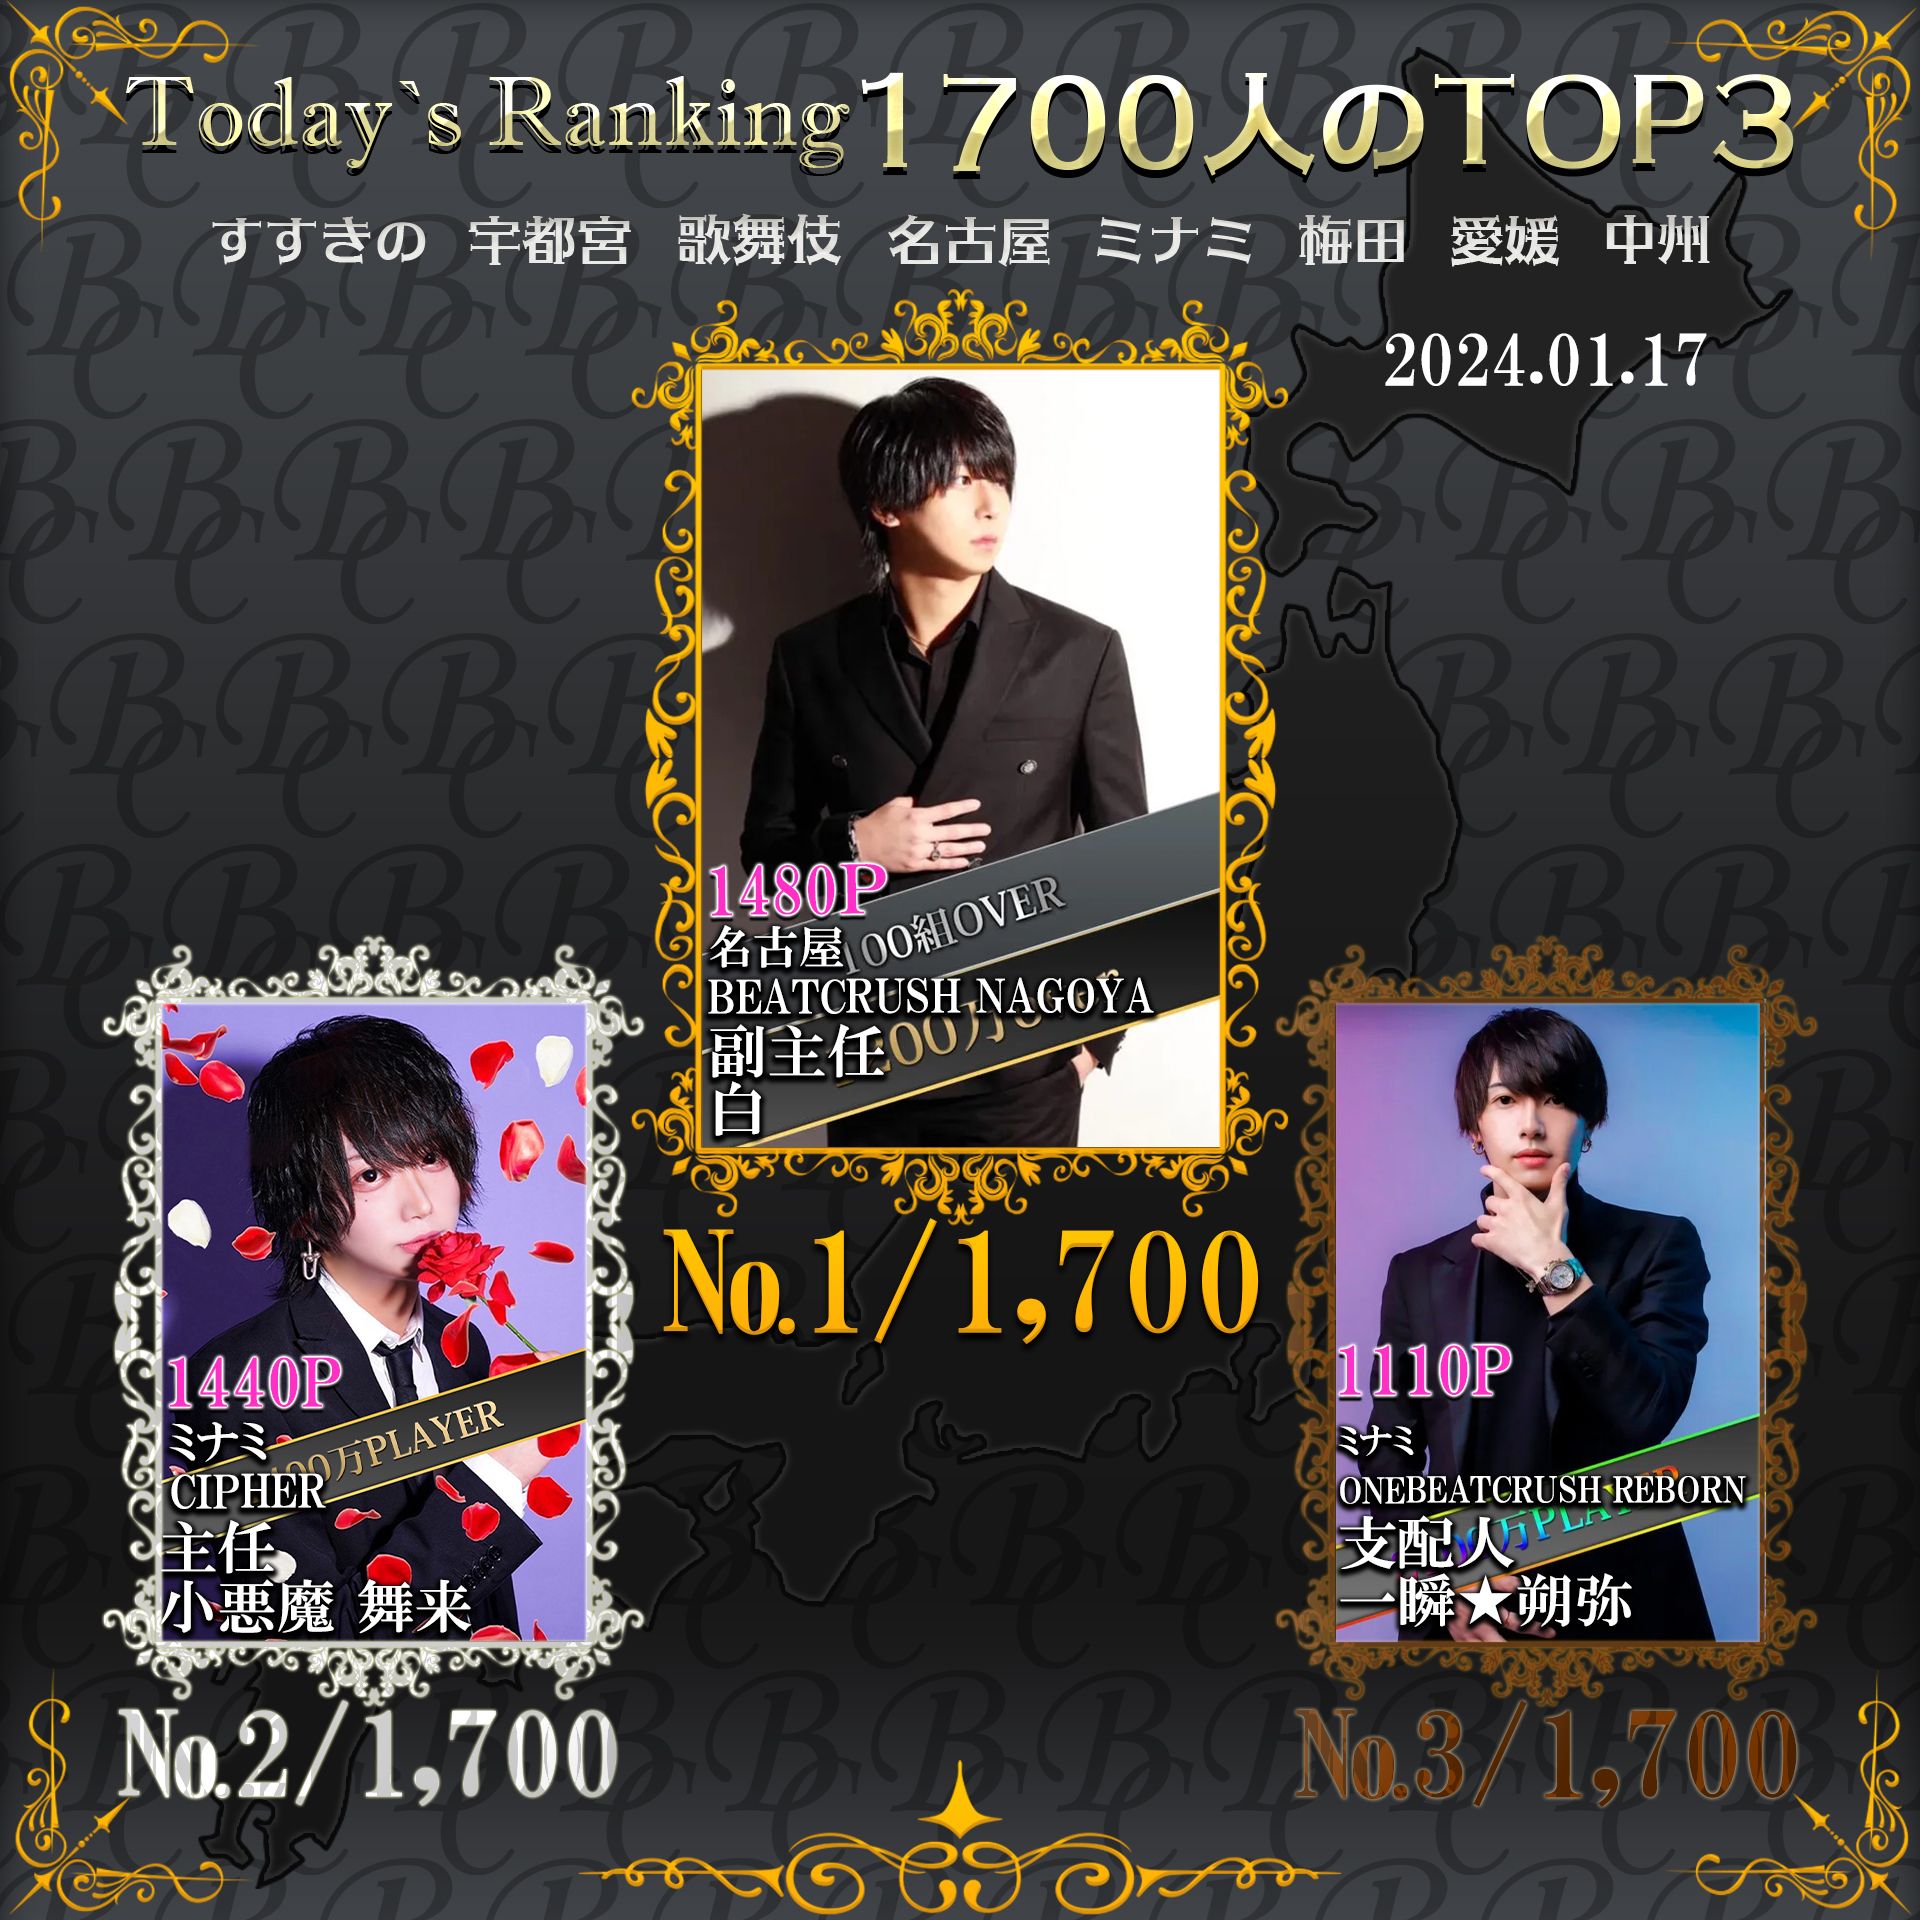 1/17  Today’s Ranking